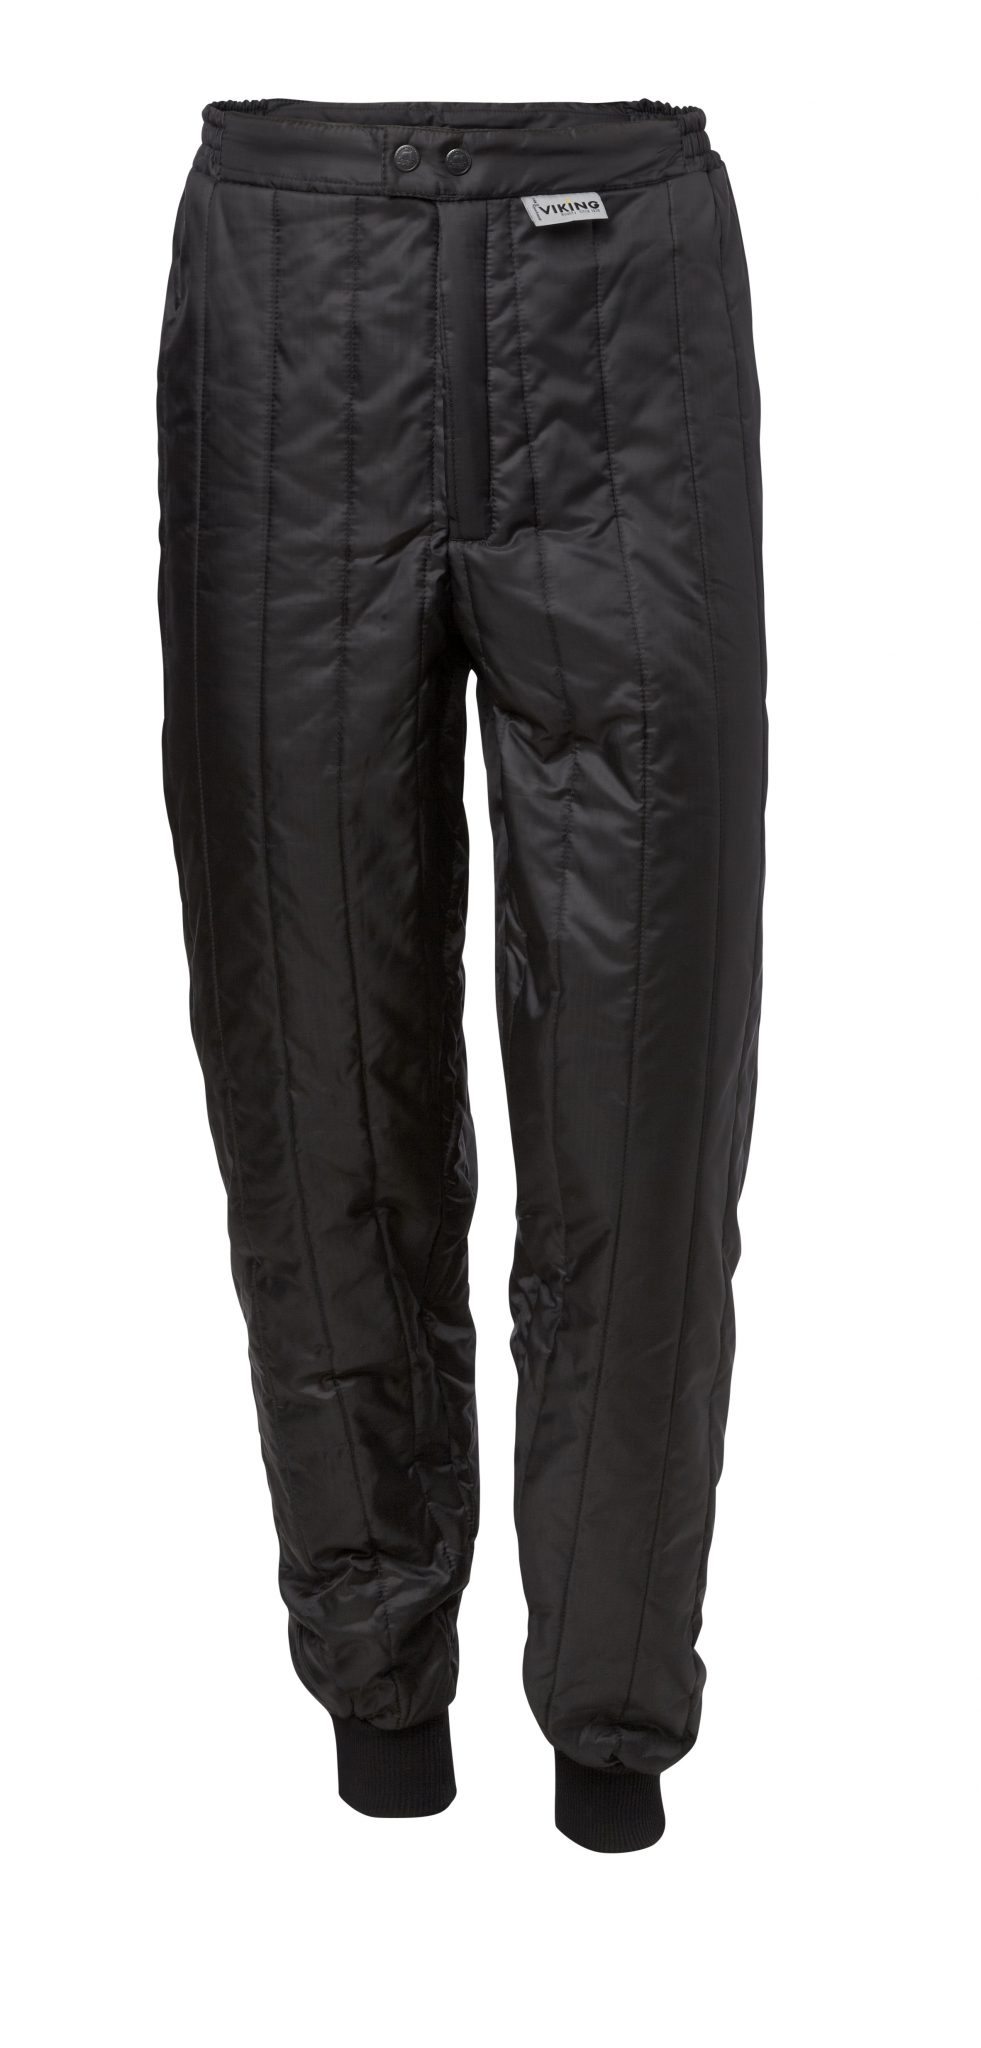 Buy HAP Men's Quilted Thermal Bottom : Trouser/Thermal Pants/Winter Inners  / (Dark Grey) at